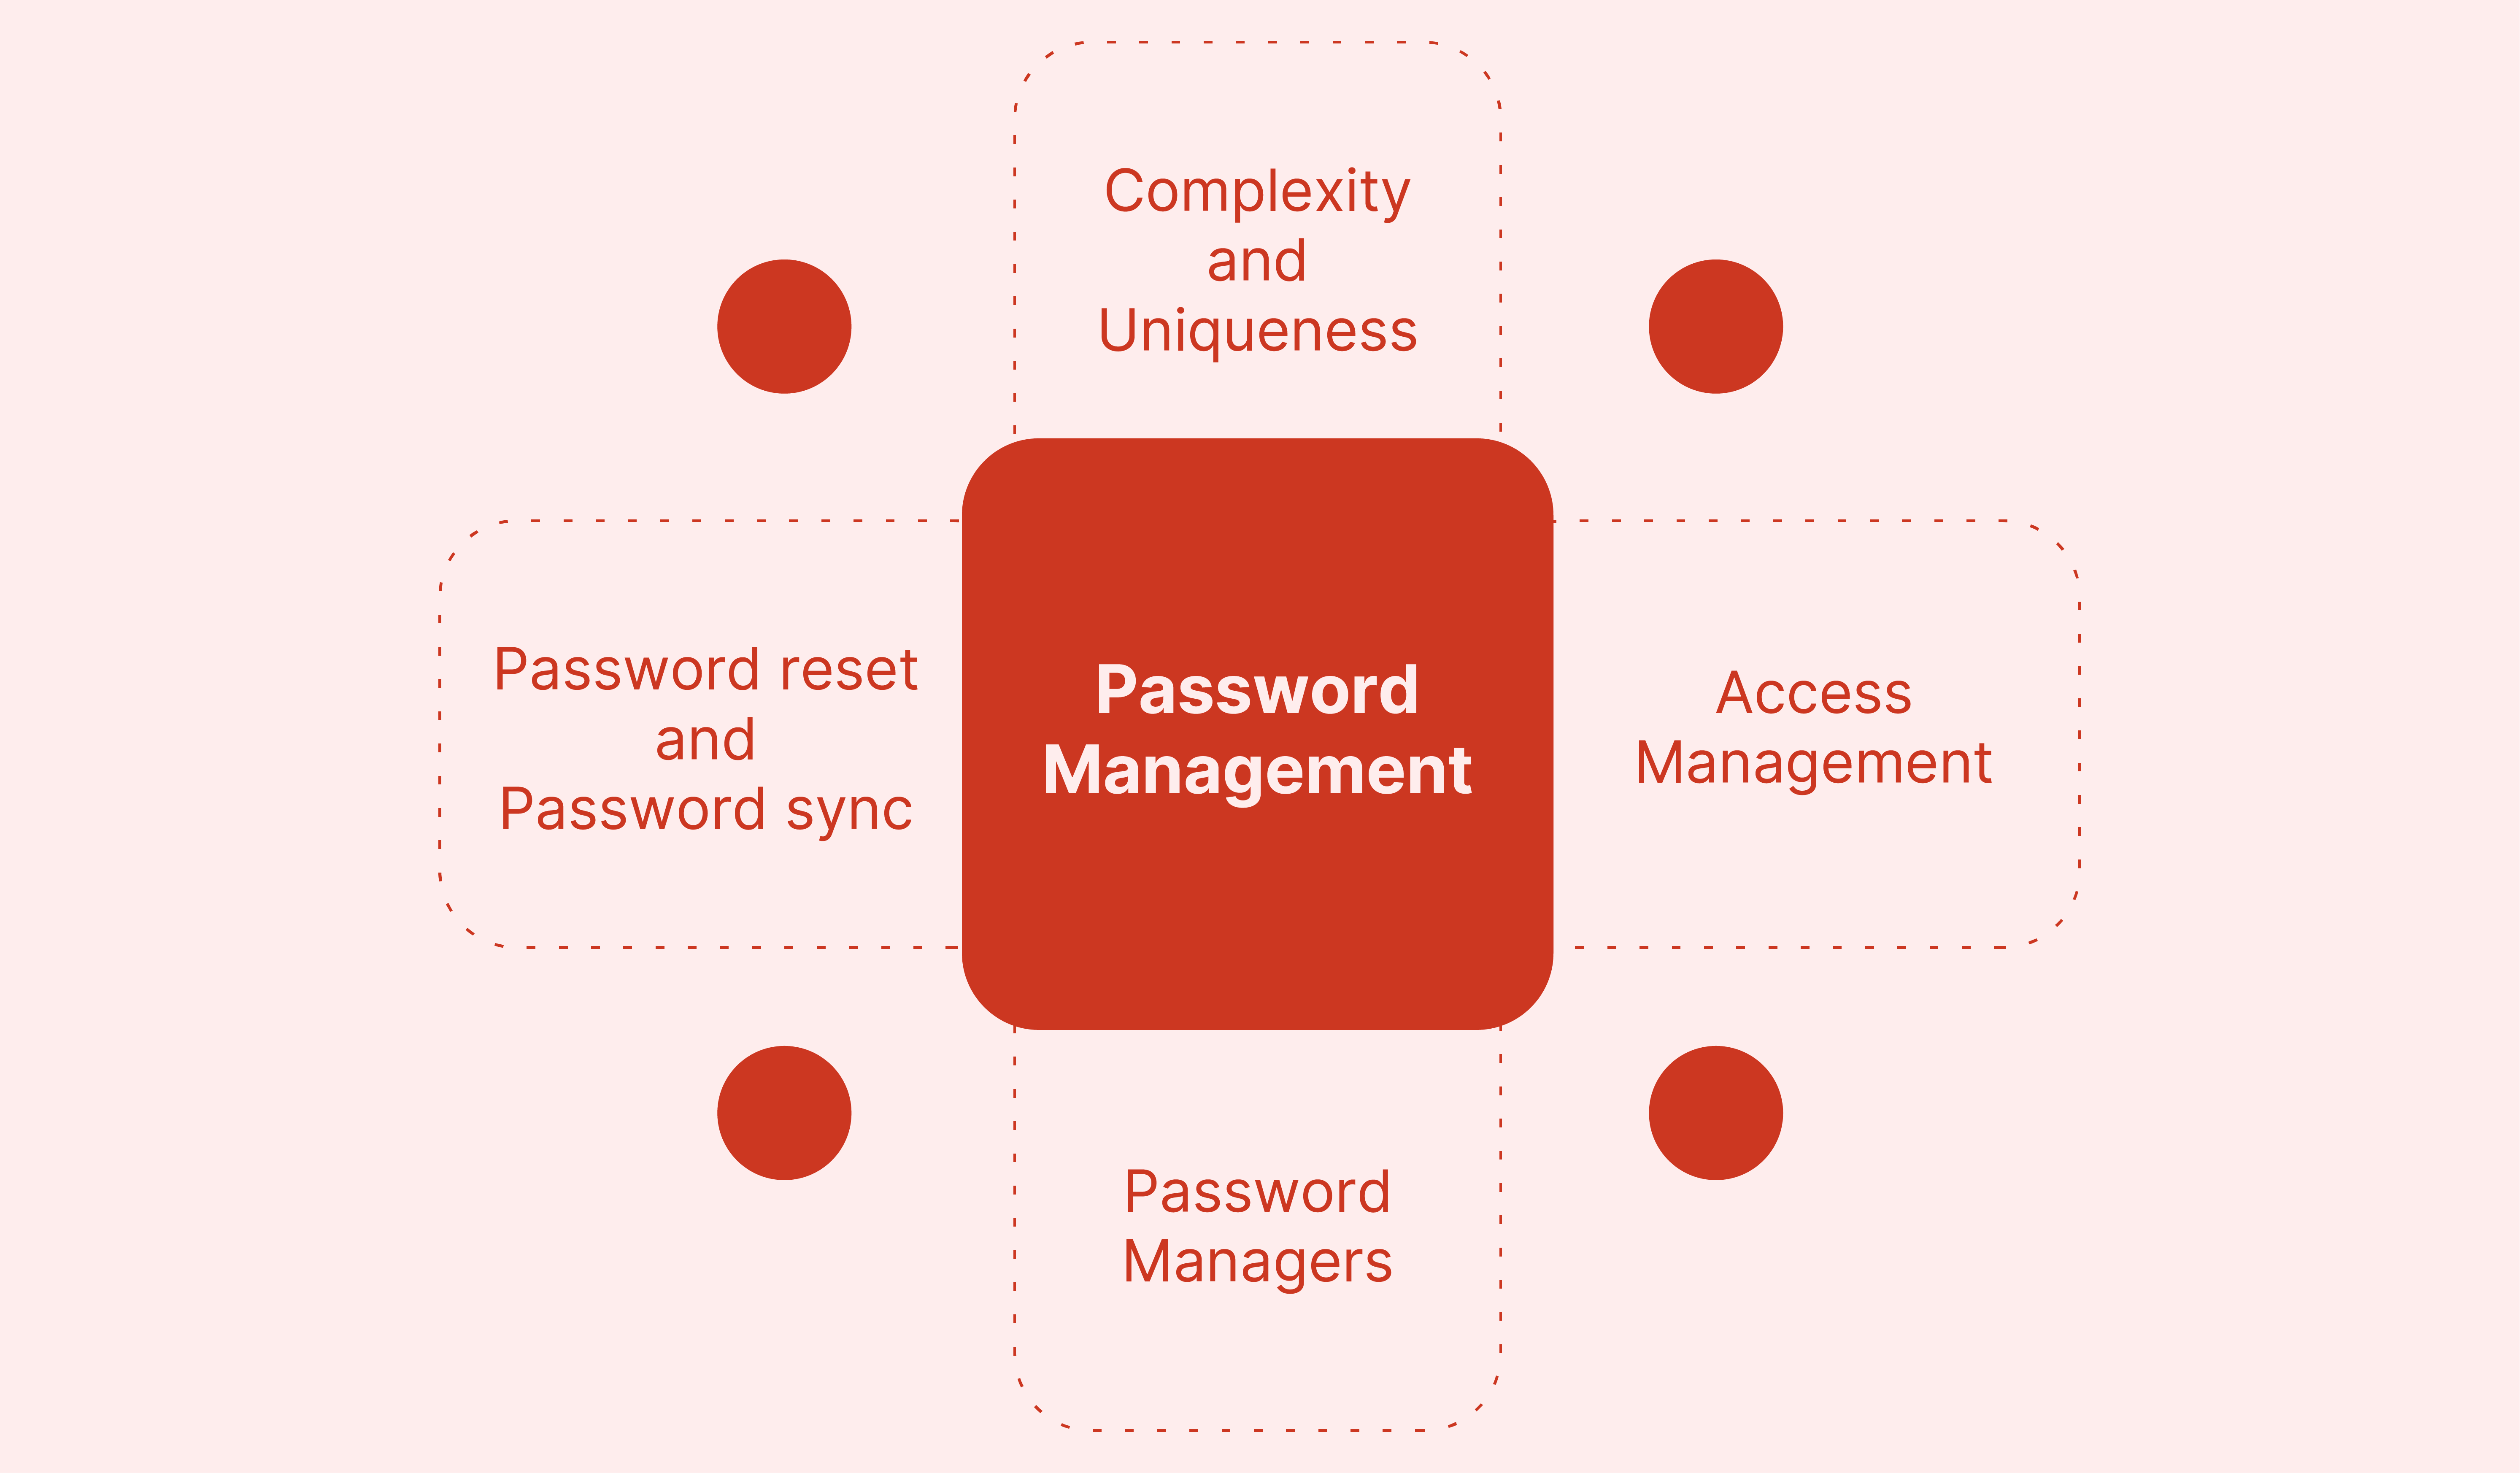 Password Management Tools